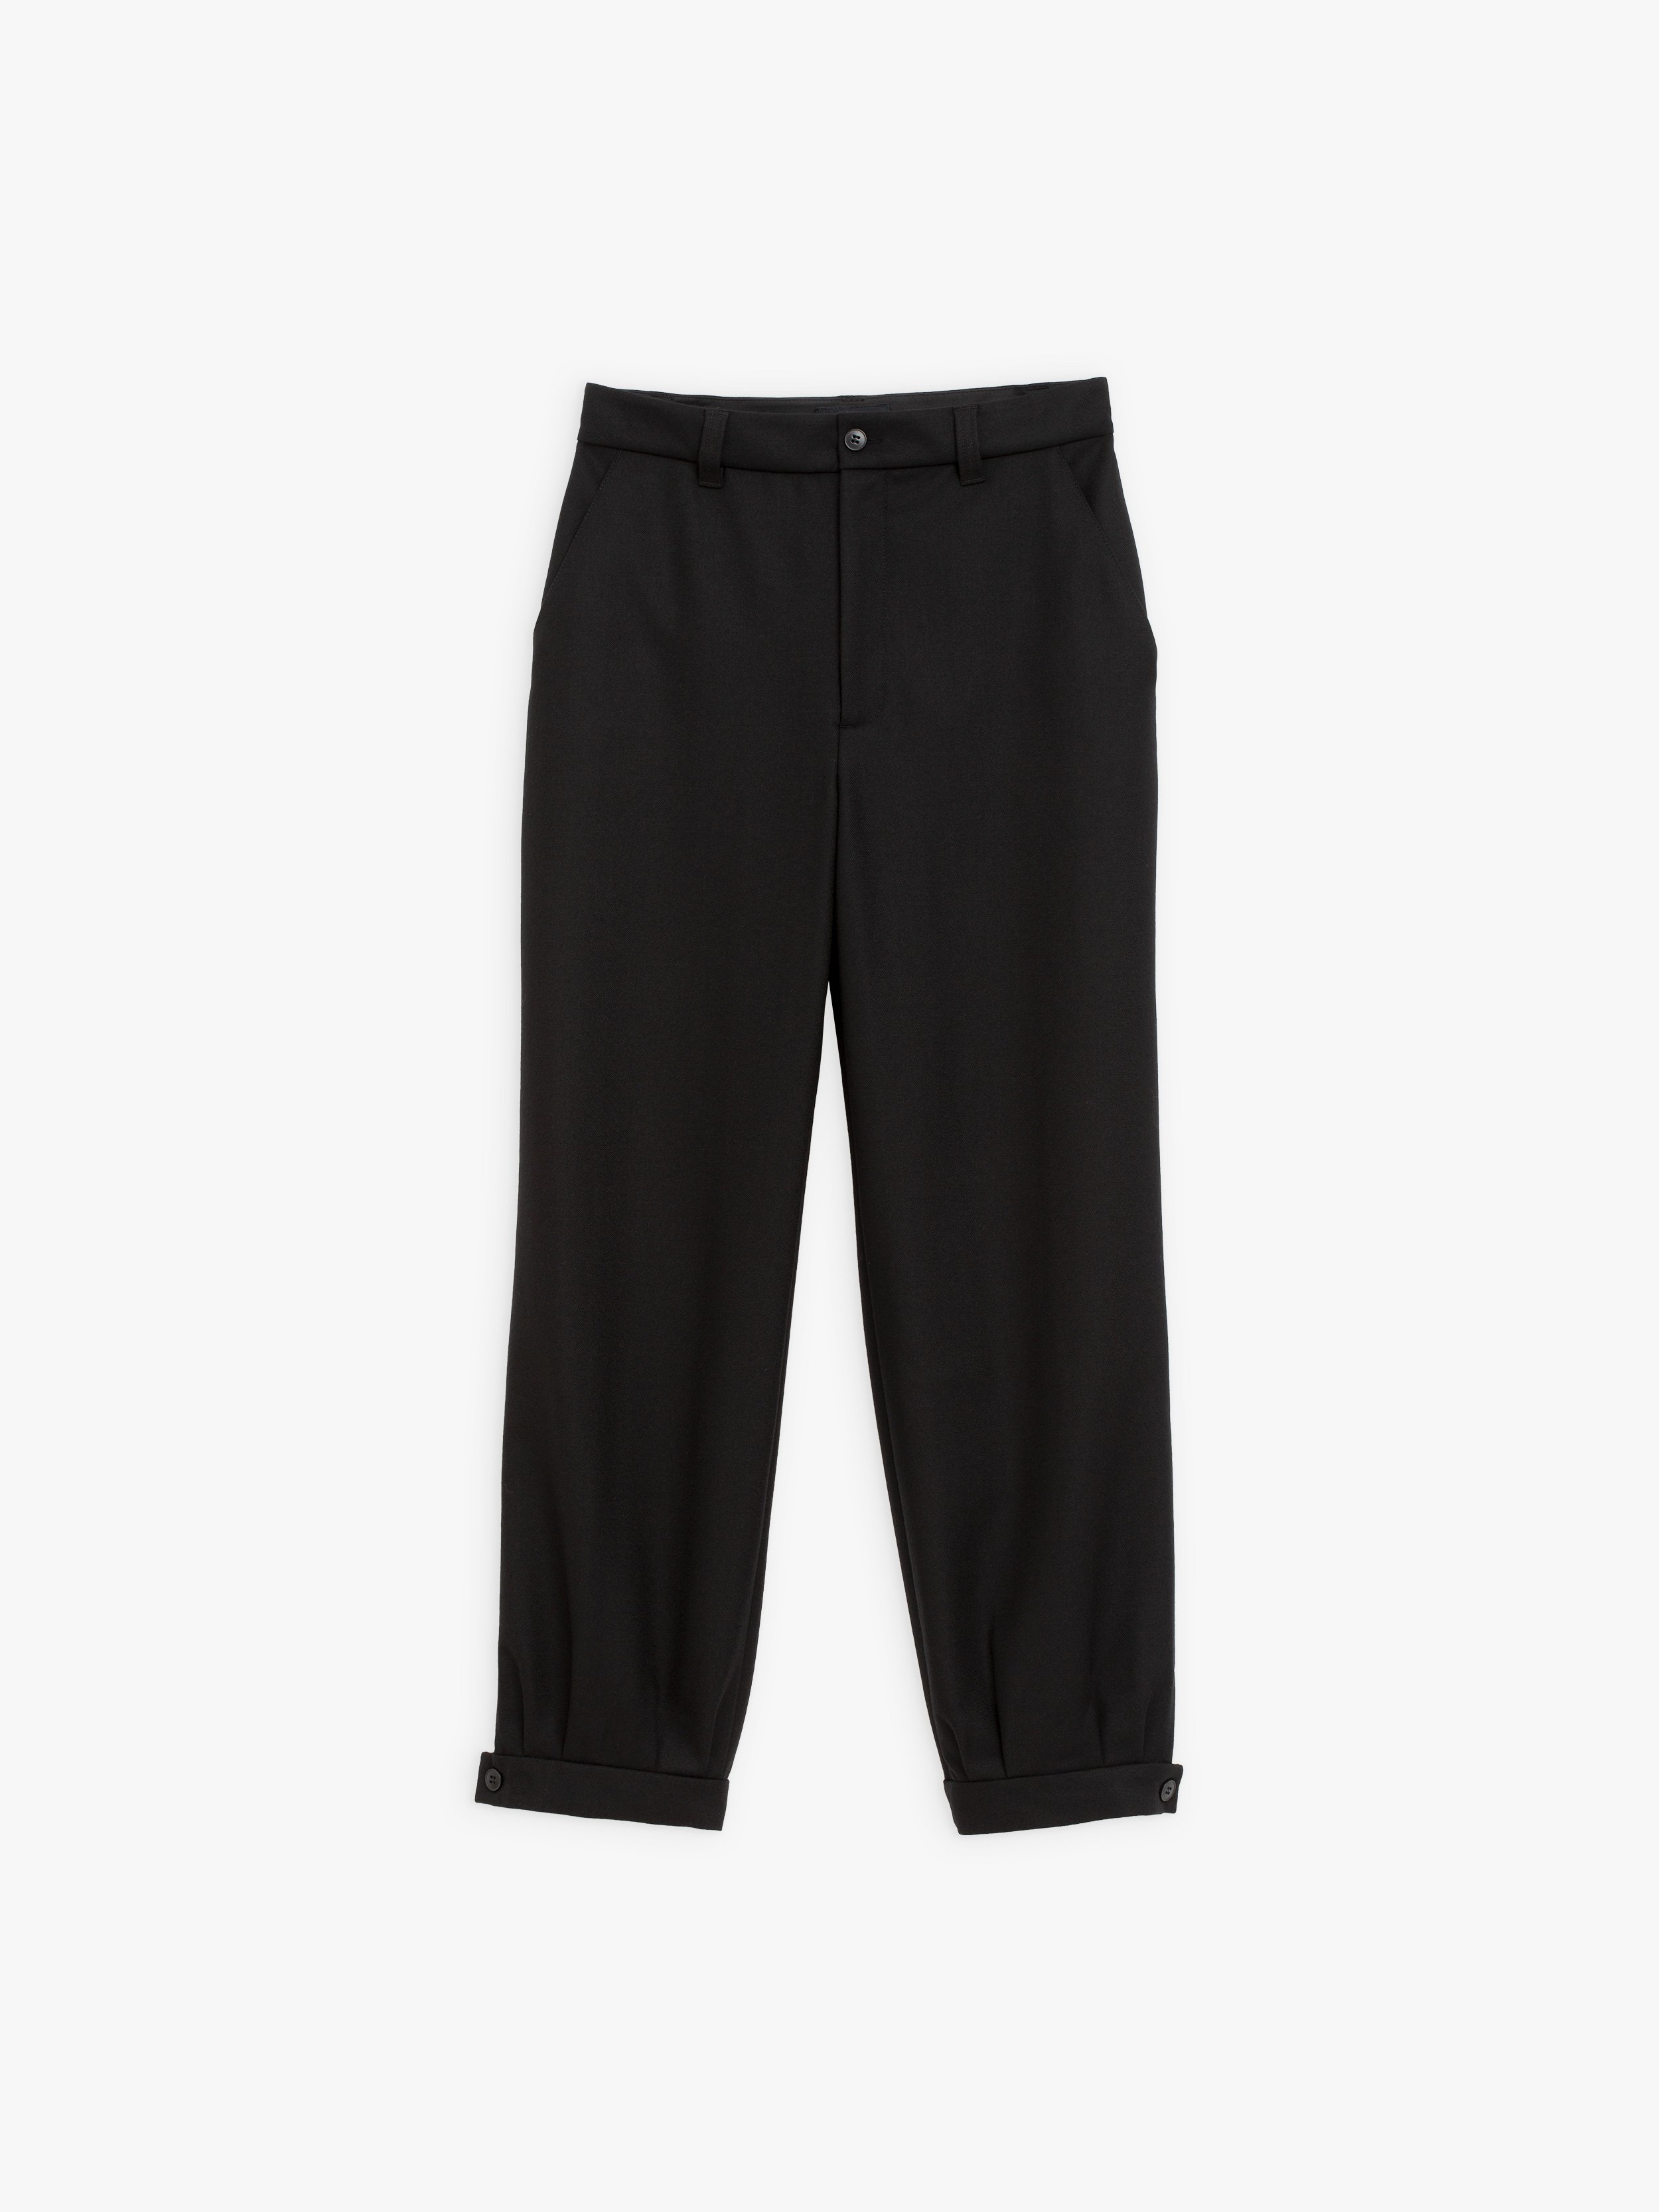 Bensol Mens Flat Front Slim Fit Wool Gabardine Pant Black 32W X 34L   Amazonin Clothing  Accessories